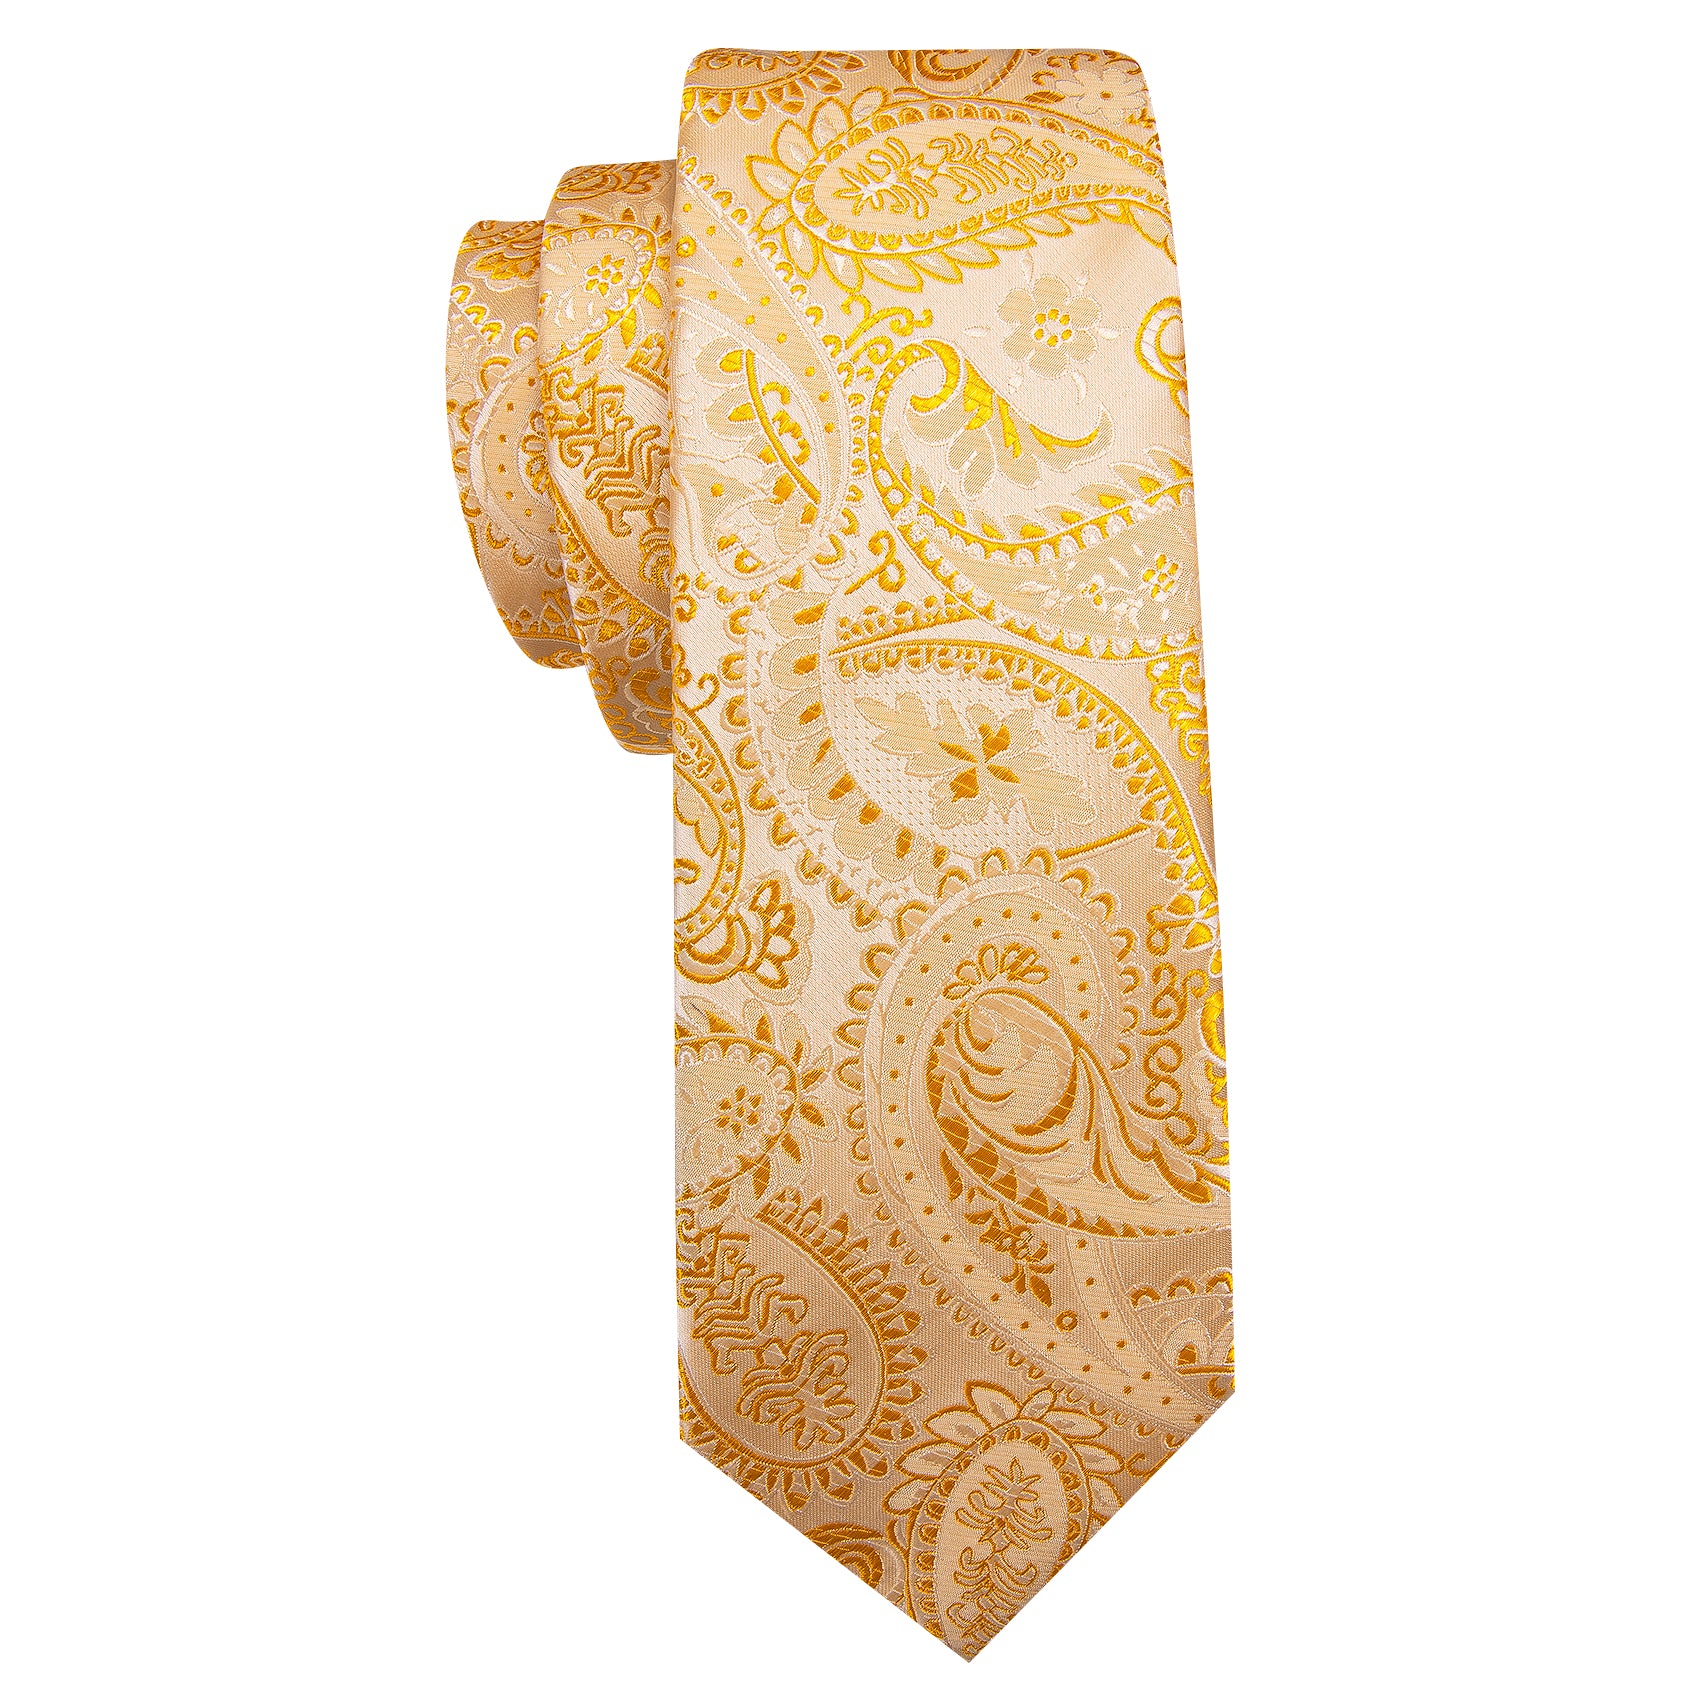 New Orange Silver Paisley Silk Tie Handkerchief Cufflinks Set